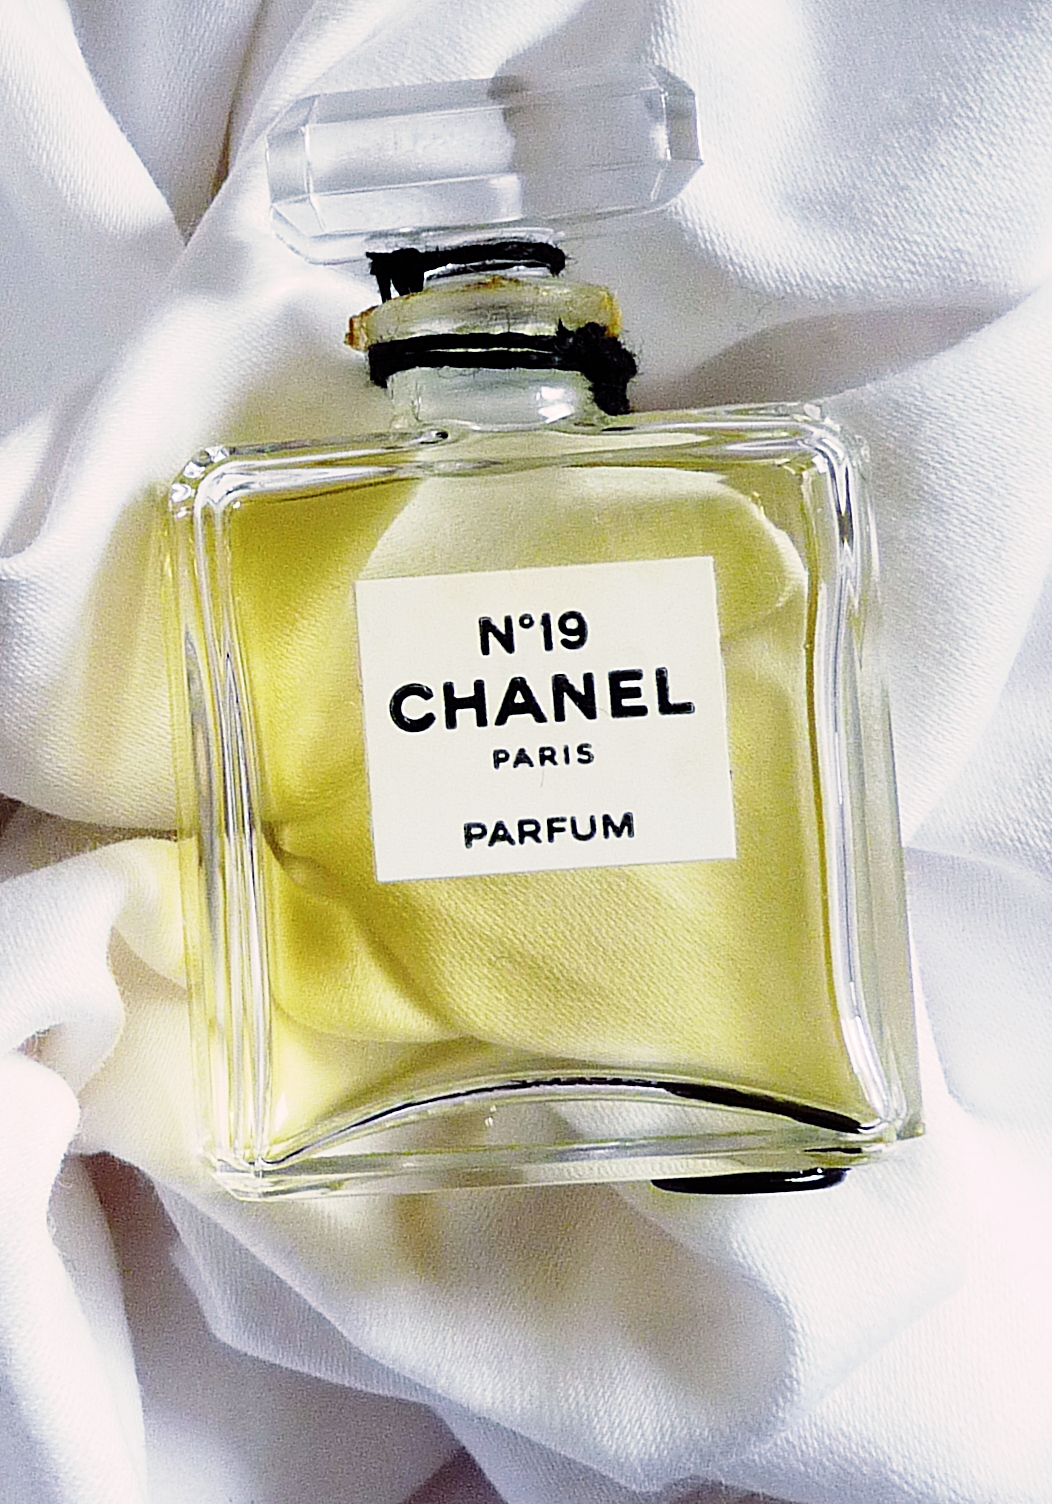 Perfumed Maze: Variations on perfume classics, part 5 (Chanel No. 19)